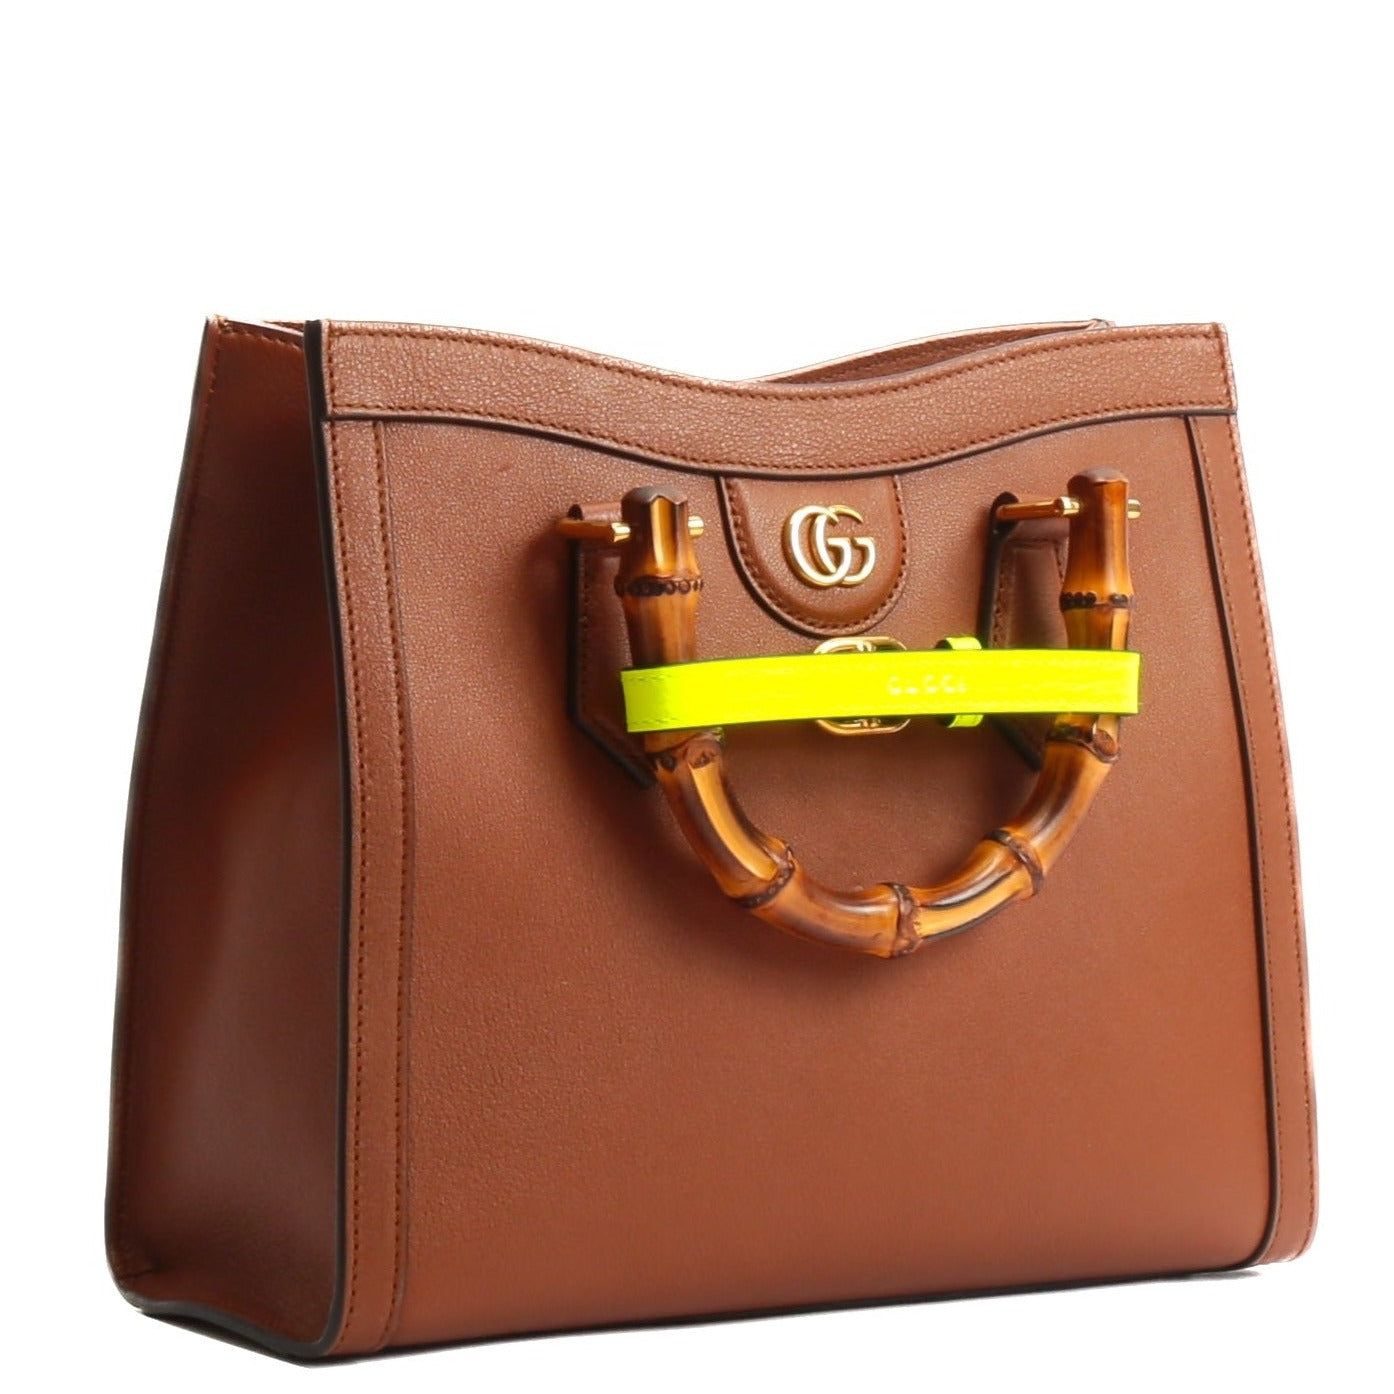 G Designer Bamboo Mini Diana Bag Totes Handbag Shoulder Bag Women